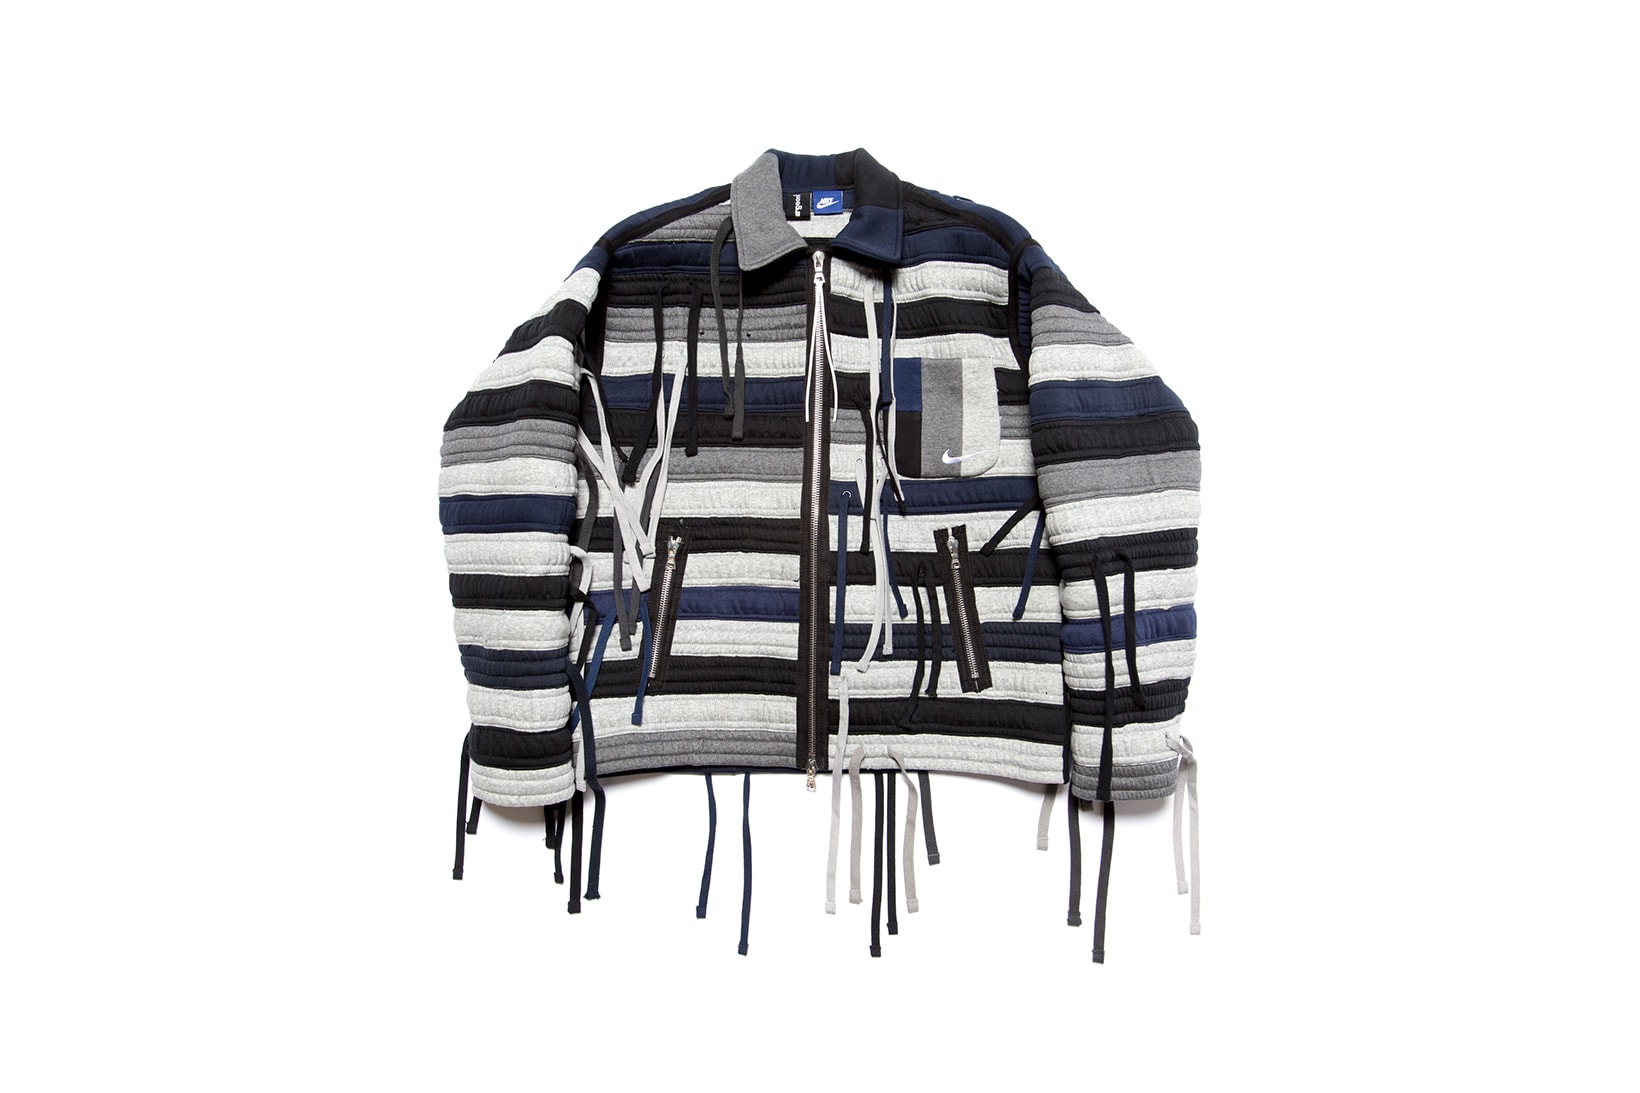 clothsurgeon nike waist band jacket vest reconstructed project sustainable navy blue white black